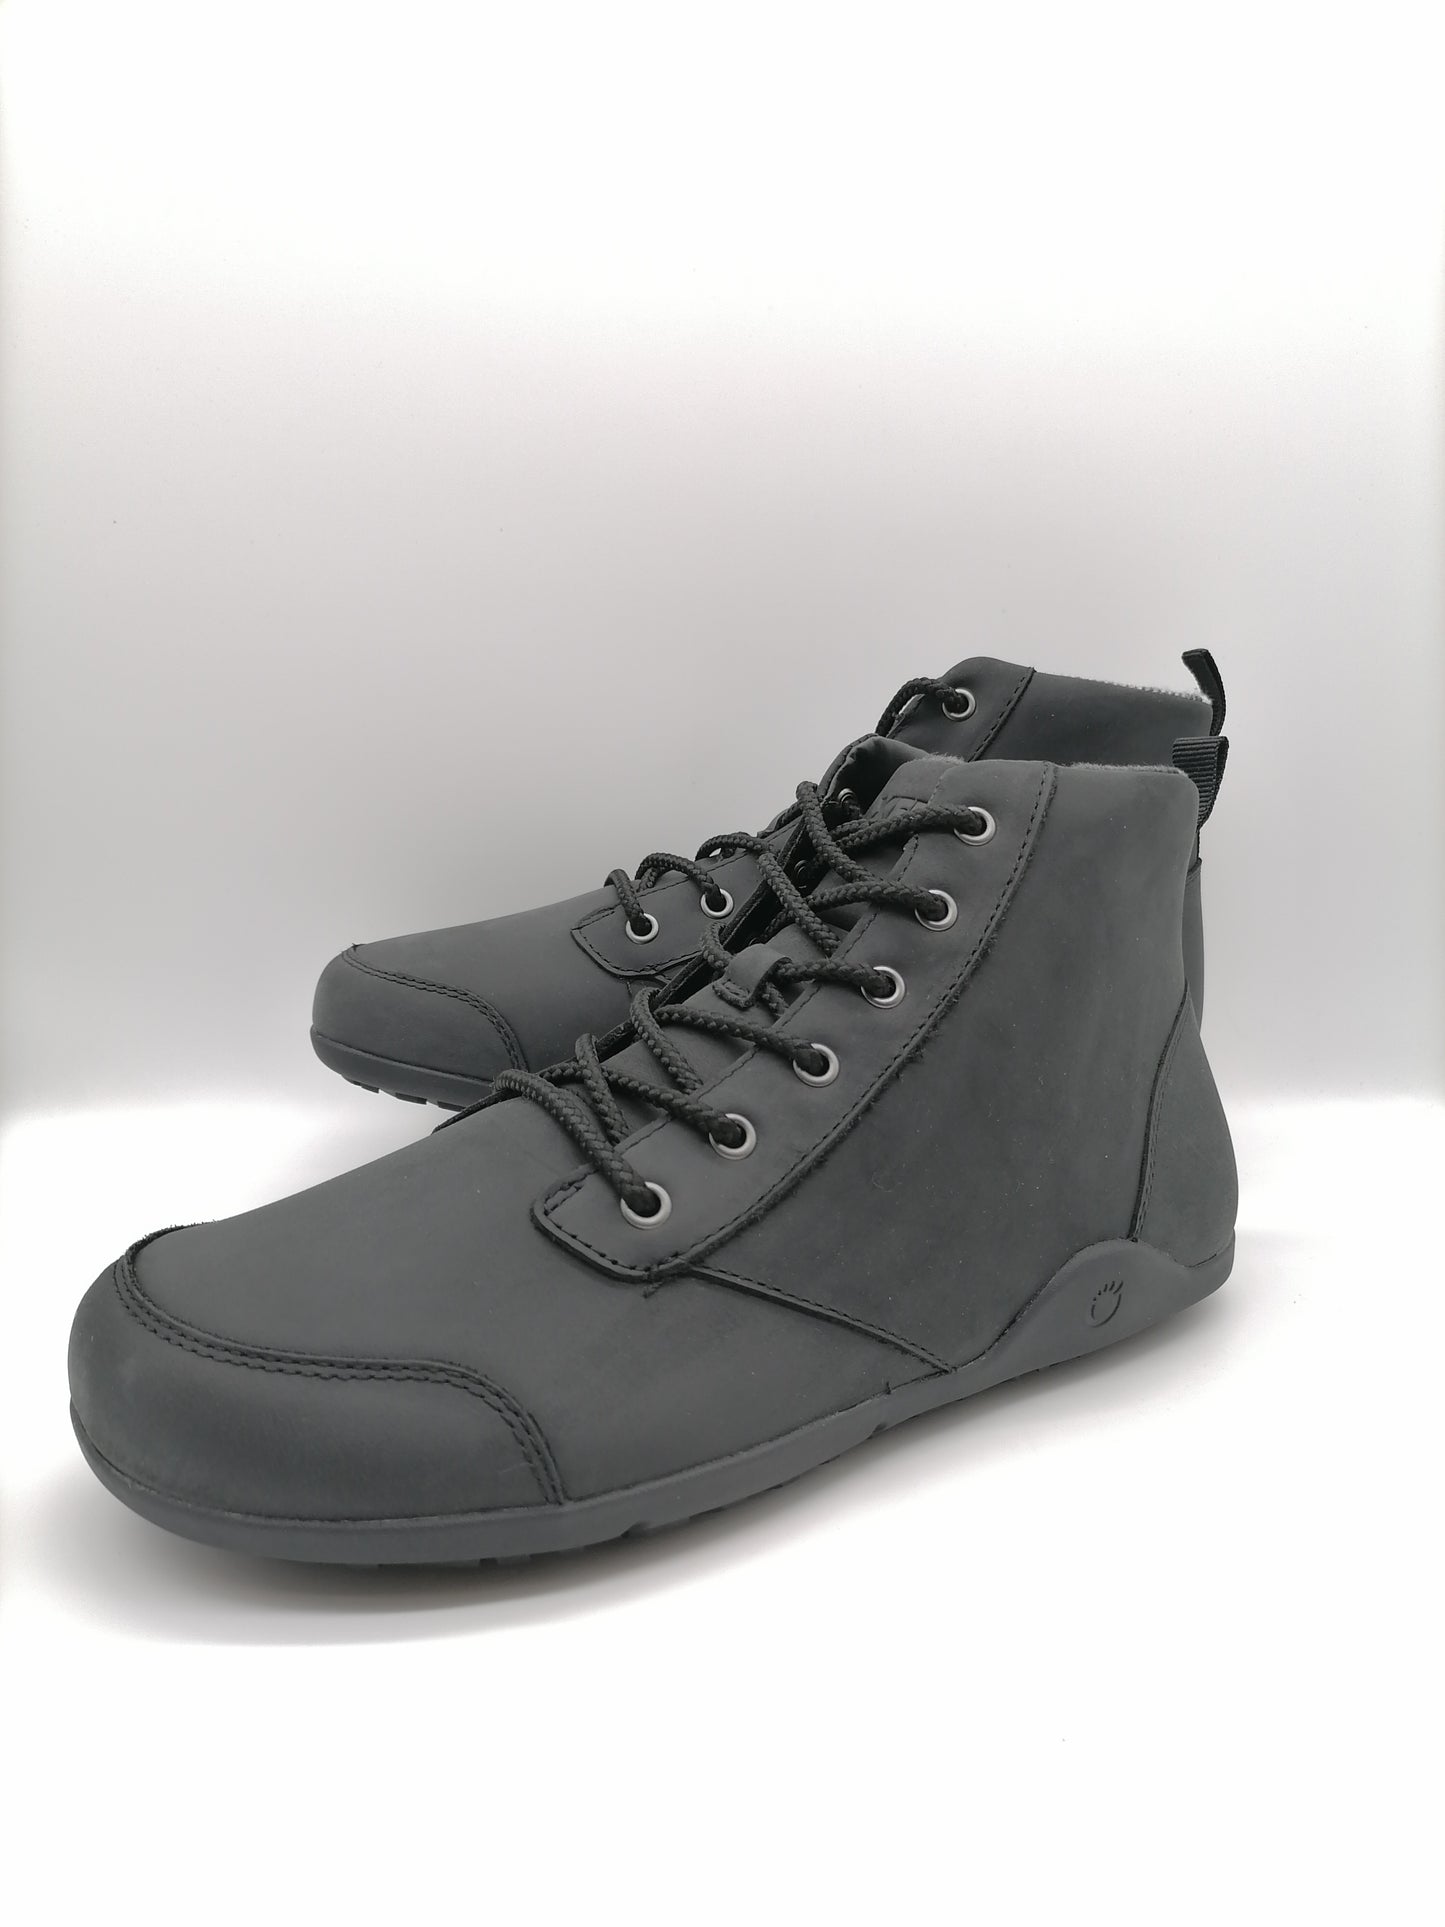 Xero Shoes Denver Leather